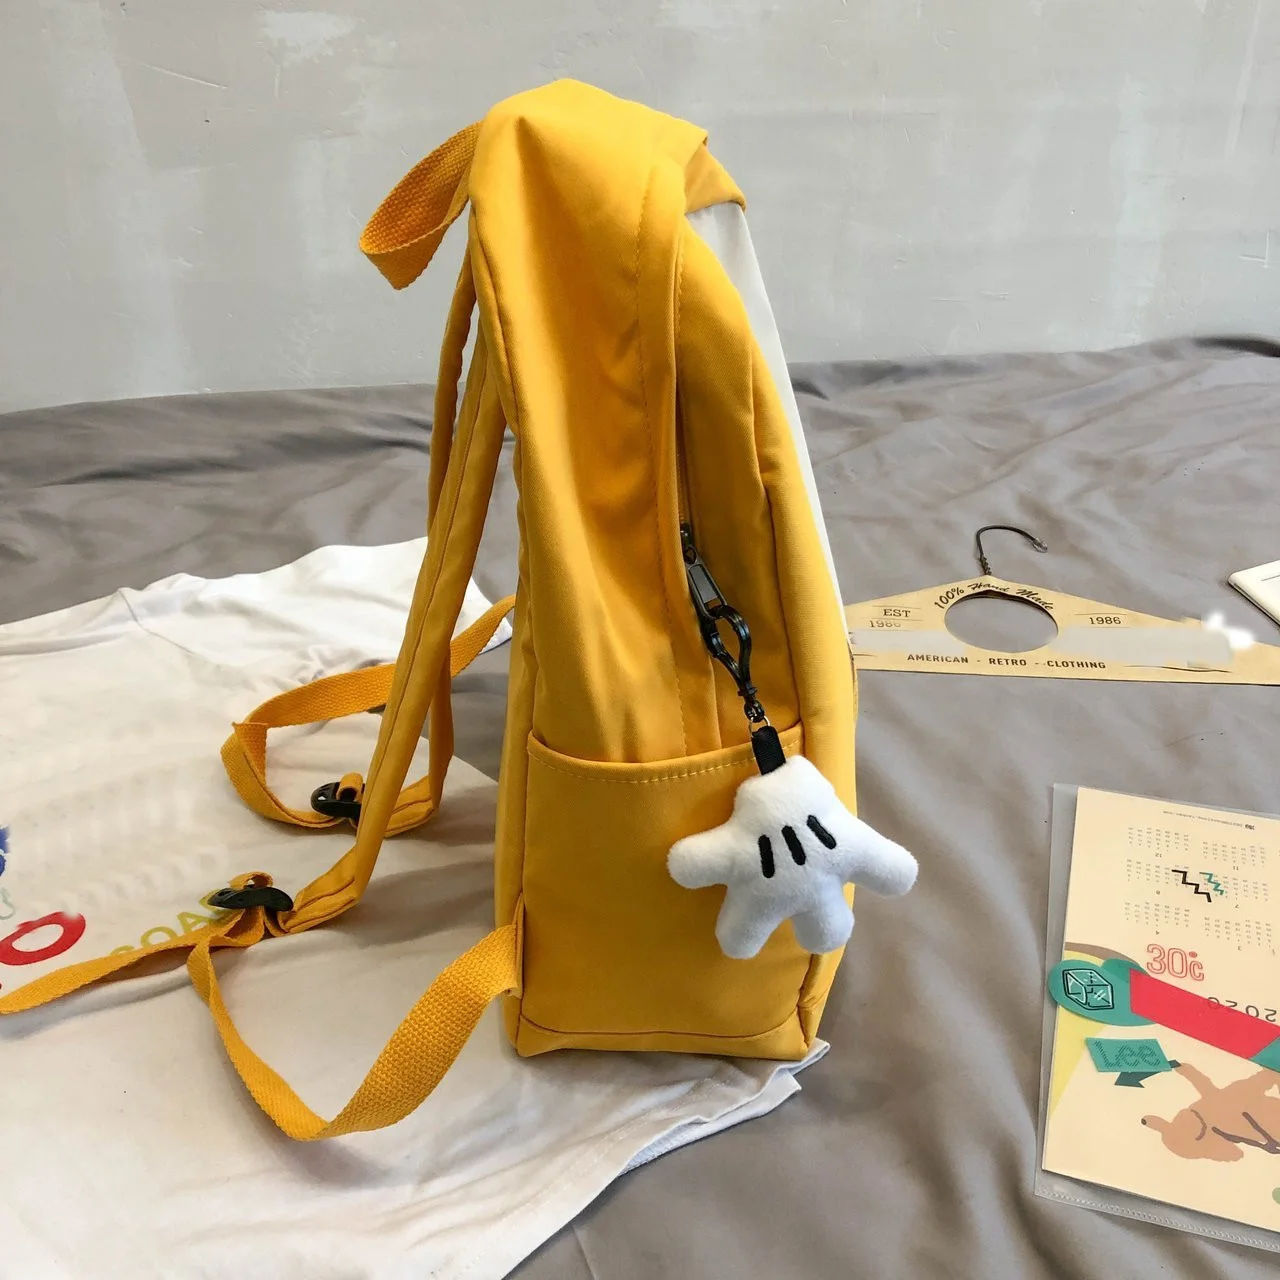 mochilas Cartoon Cute School Bag for Teenage Girls kids kawaii school backpack girl fashion backpack lightweight waterproof Book Backpack